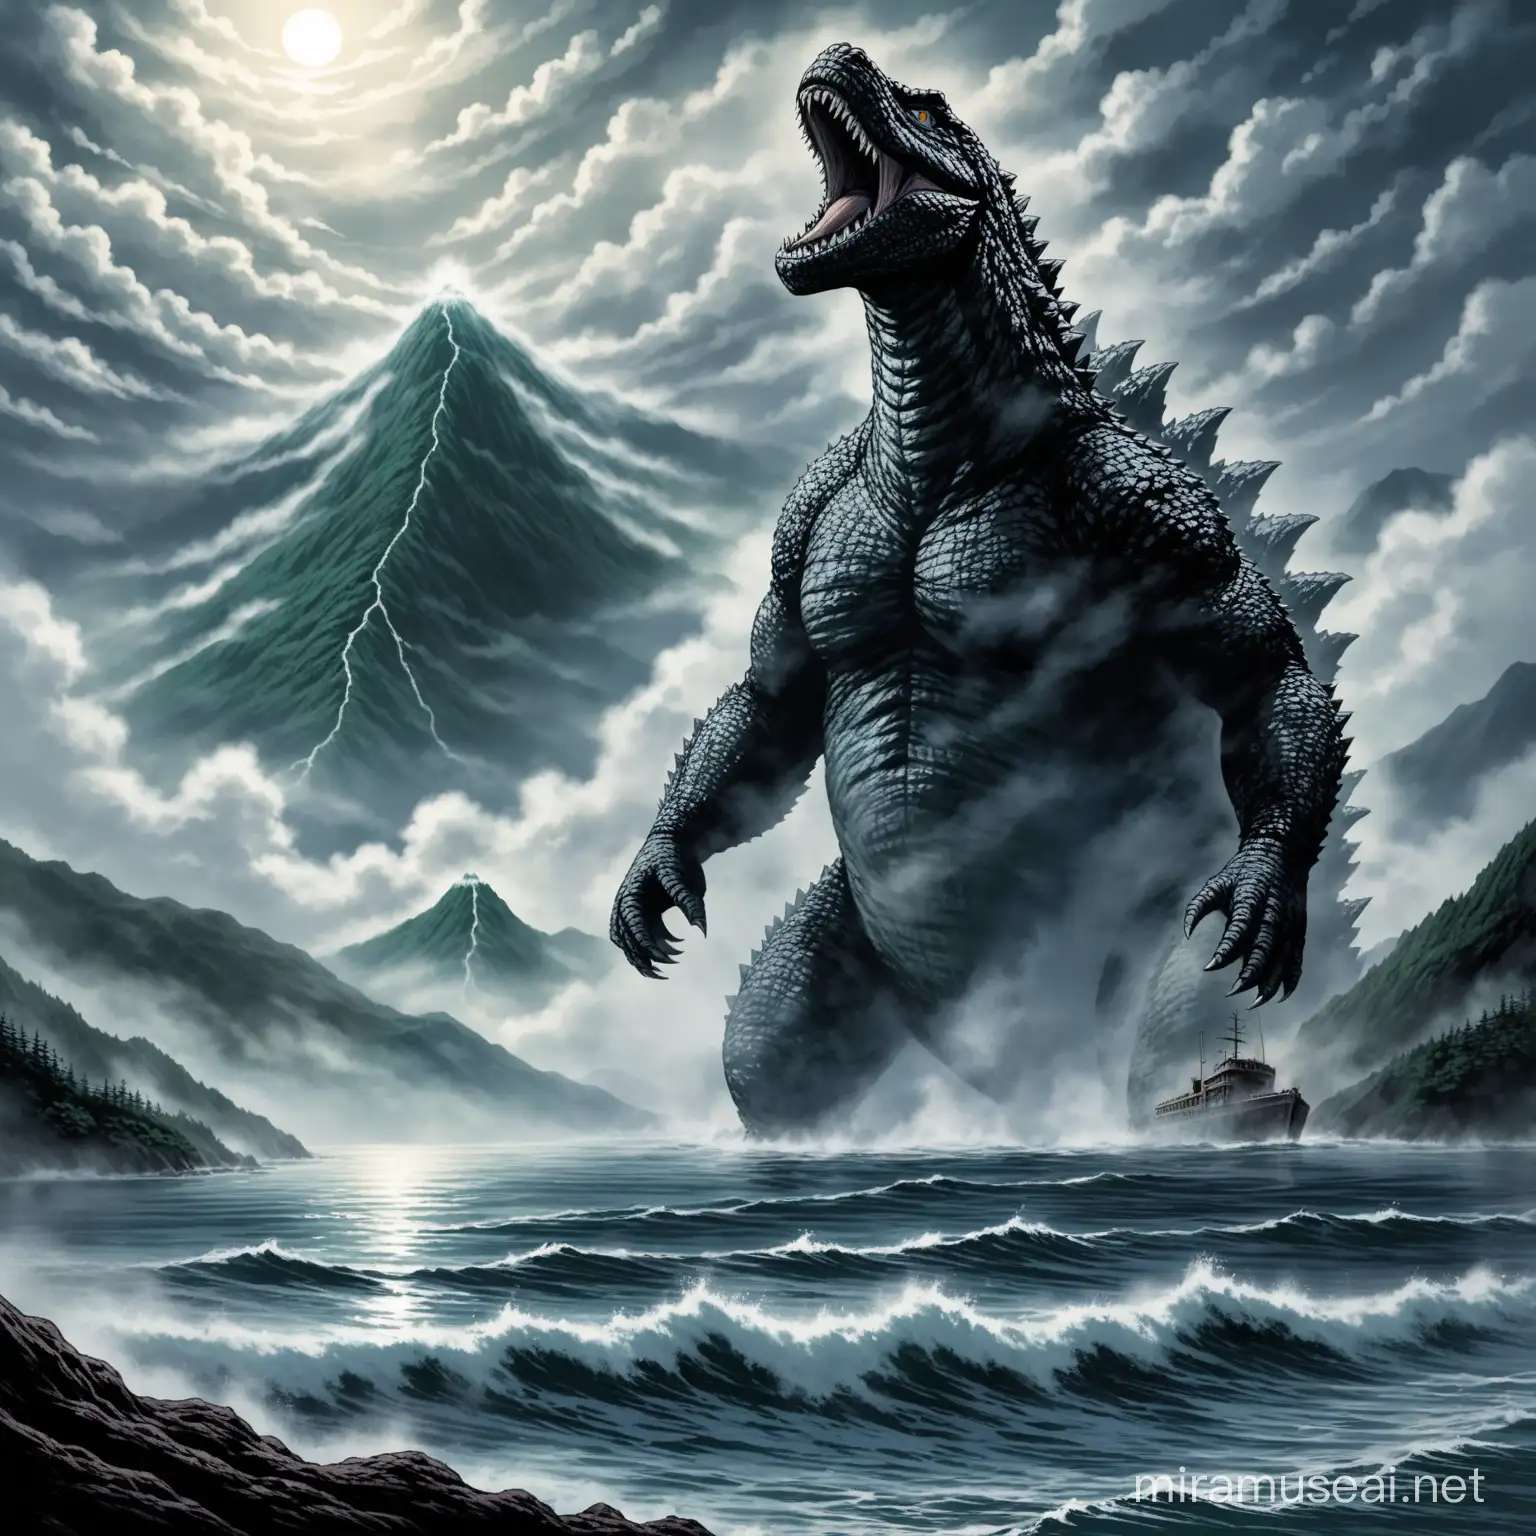 Legendary Godzilla Horror Movie Scene Foggy Mountain Ocean Encounter